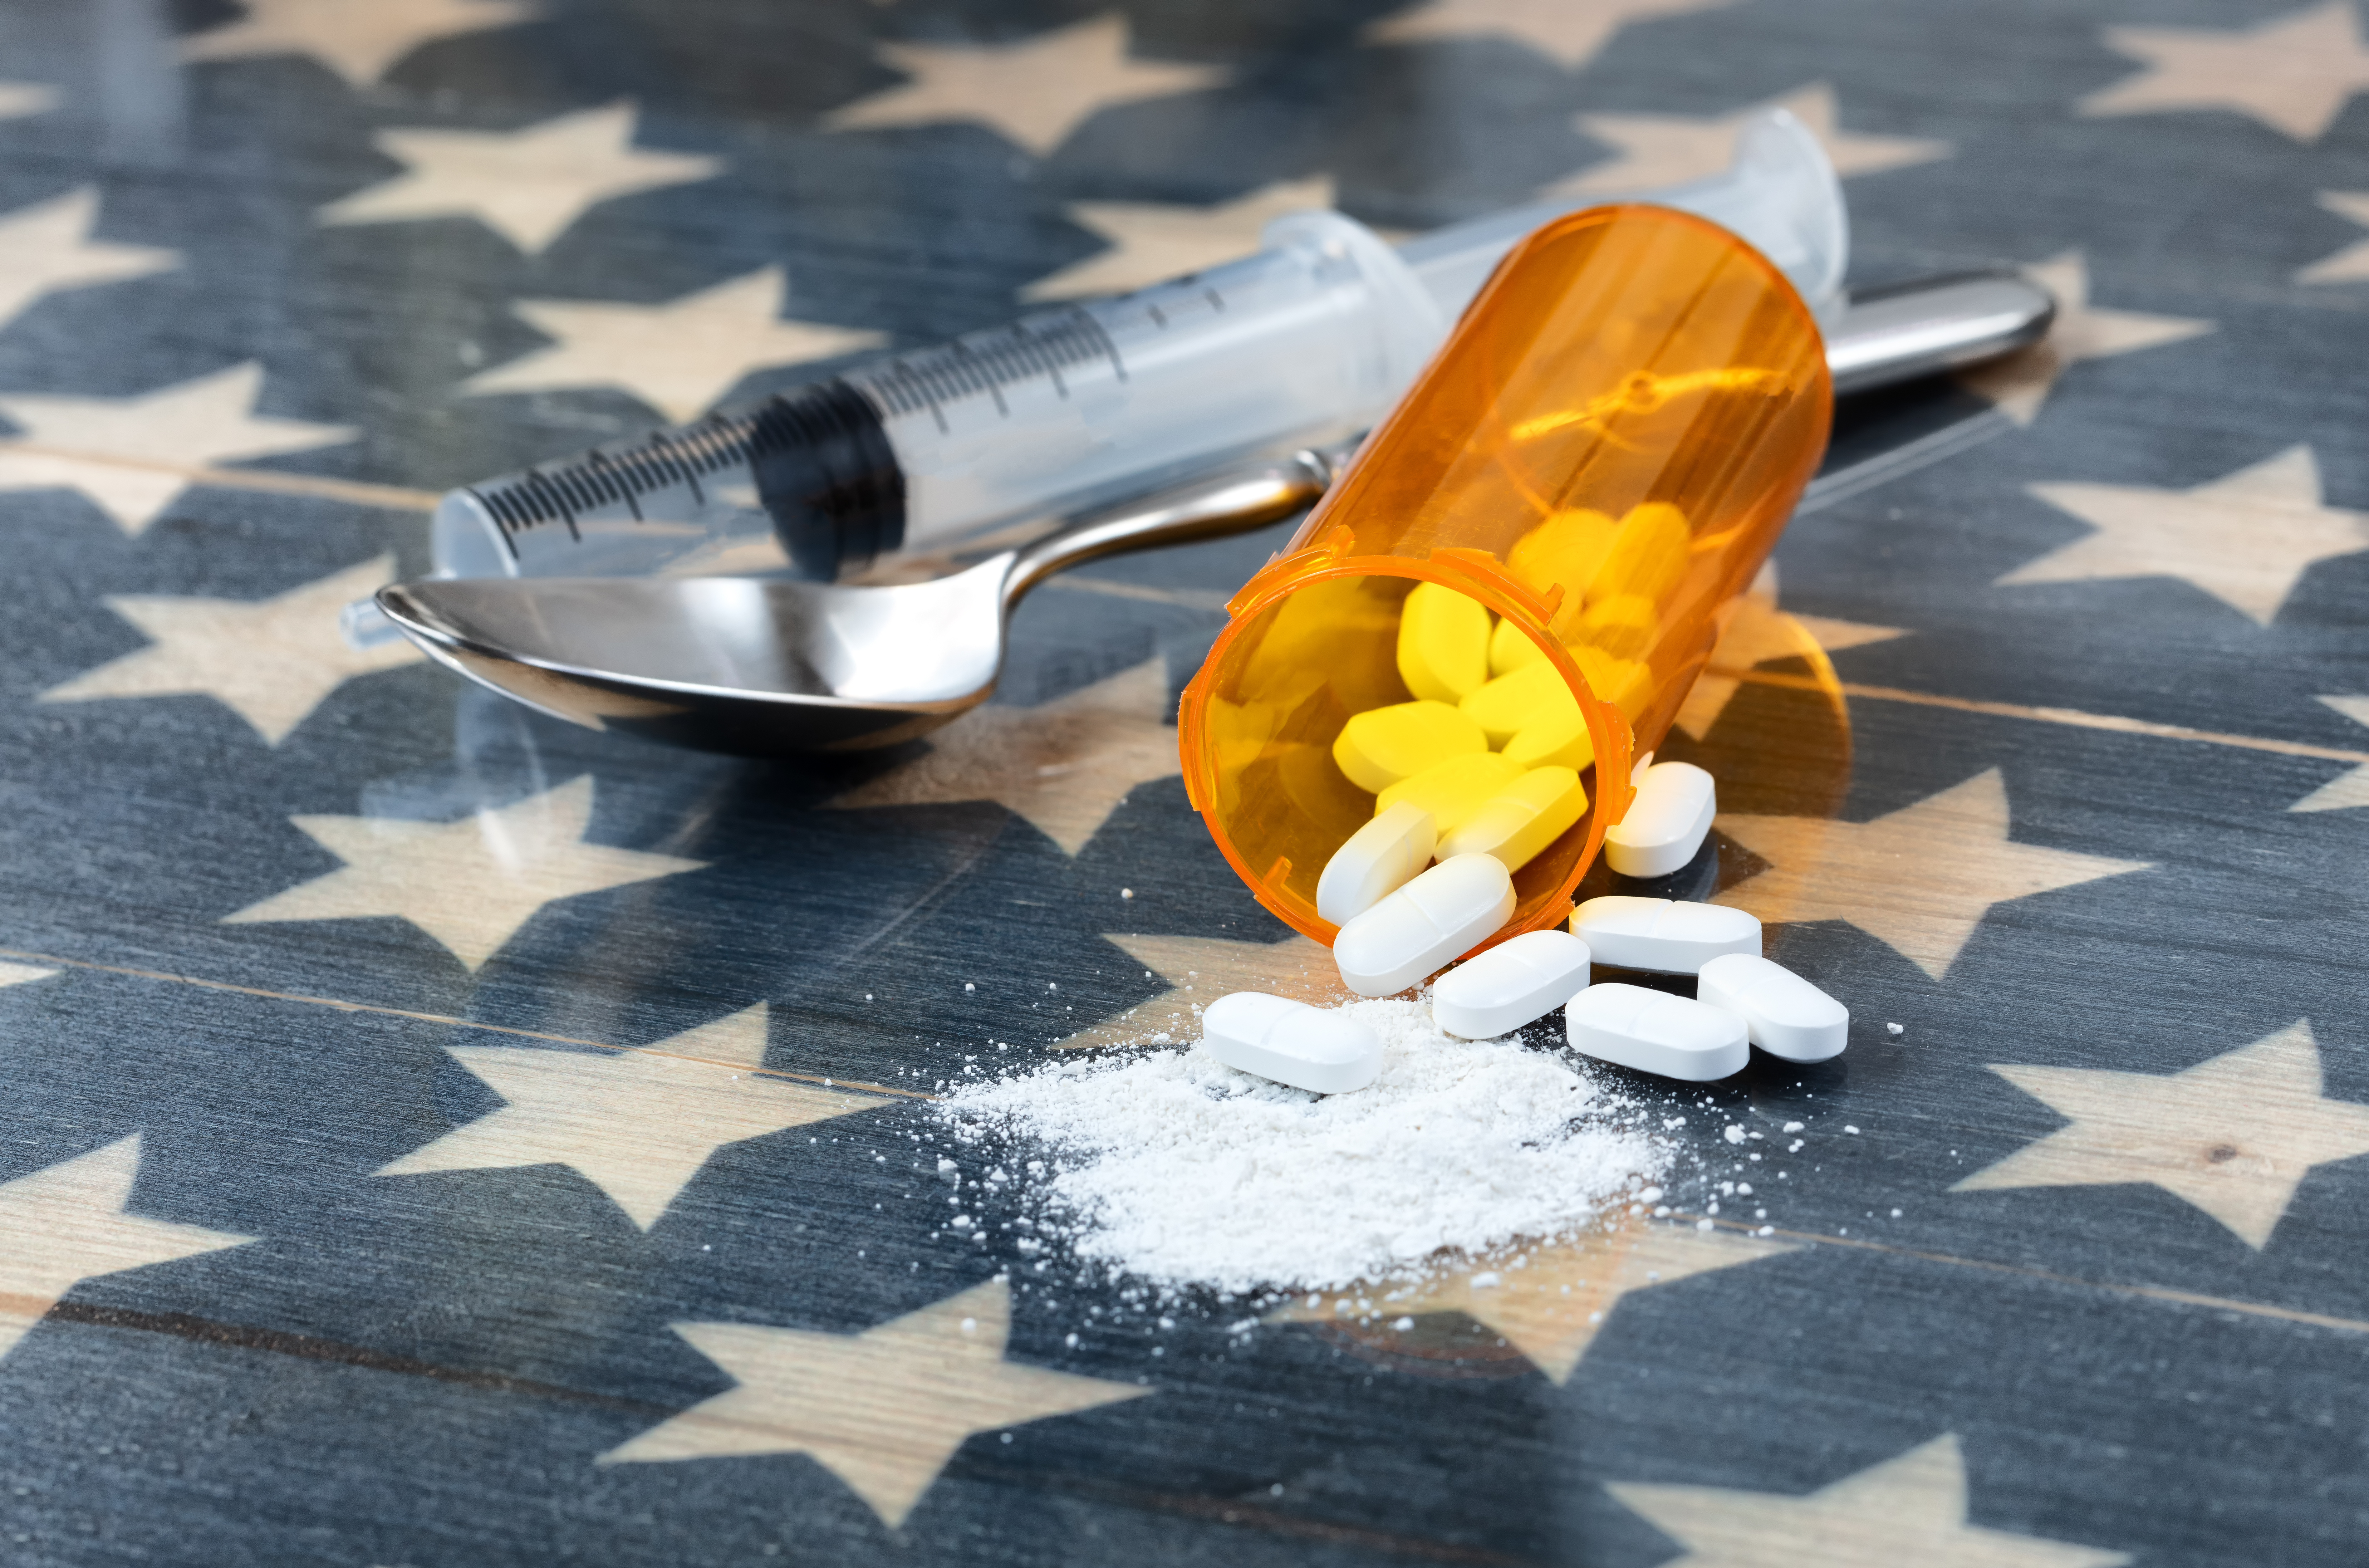 Drug possession/opioid graphic